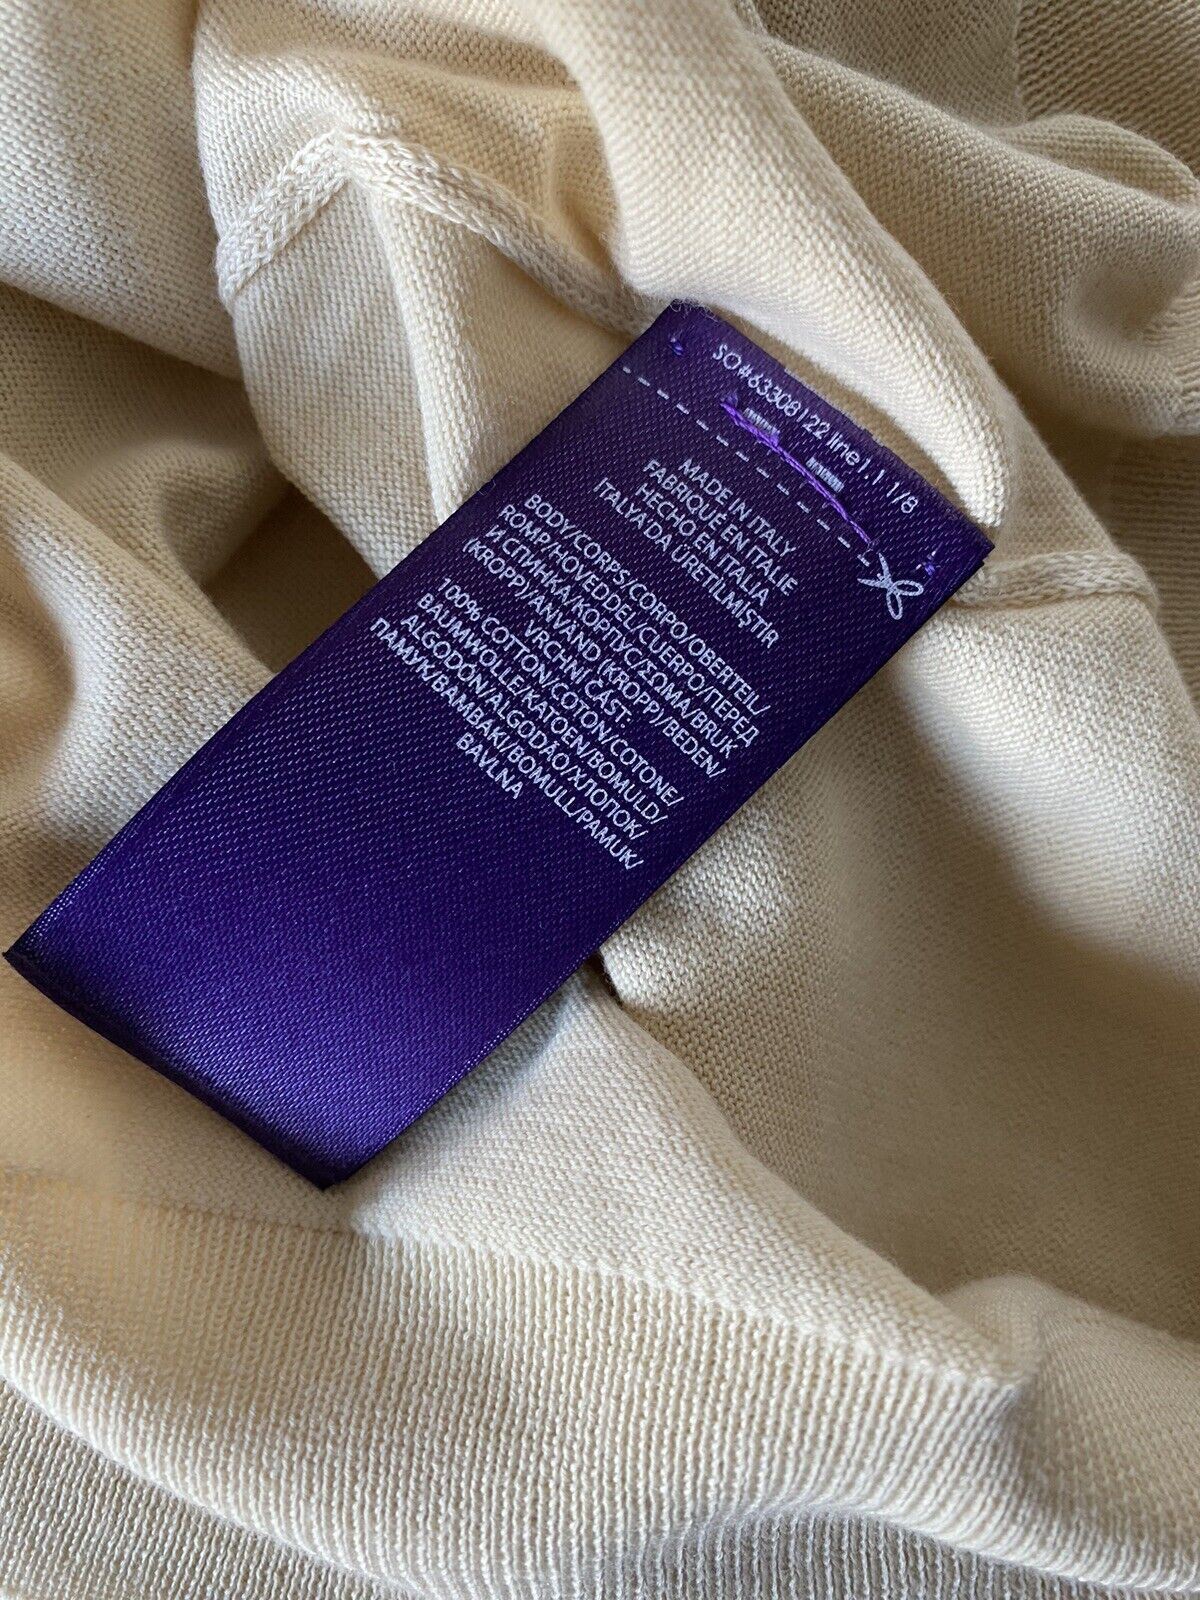 Polo Ralph Lauren Purple Label Men's Cotton Winter Cream Sweater L IT NWT $695